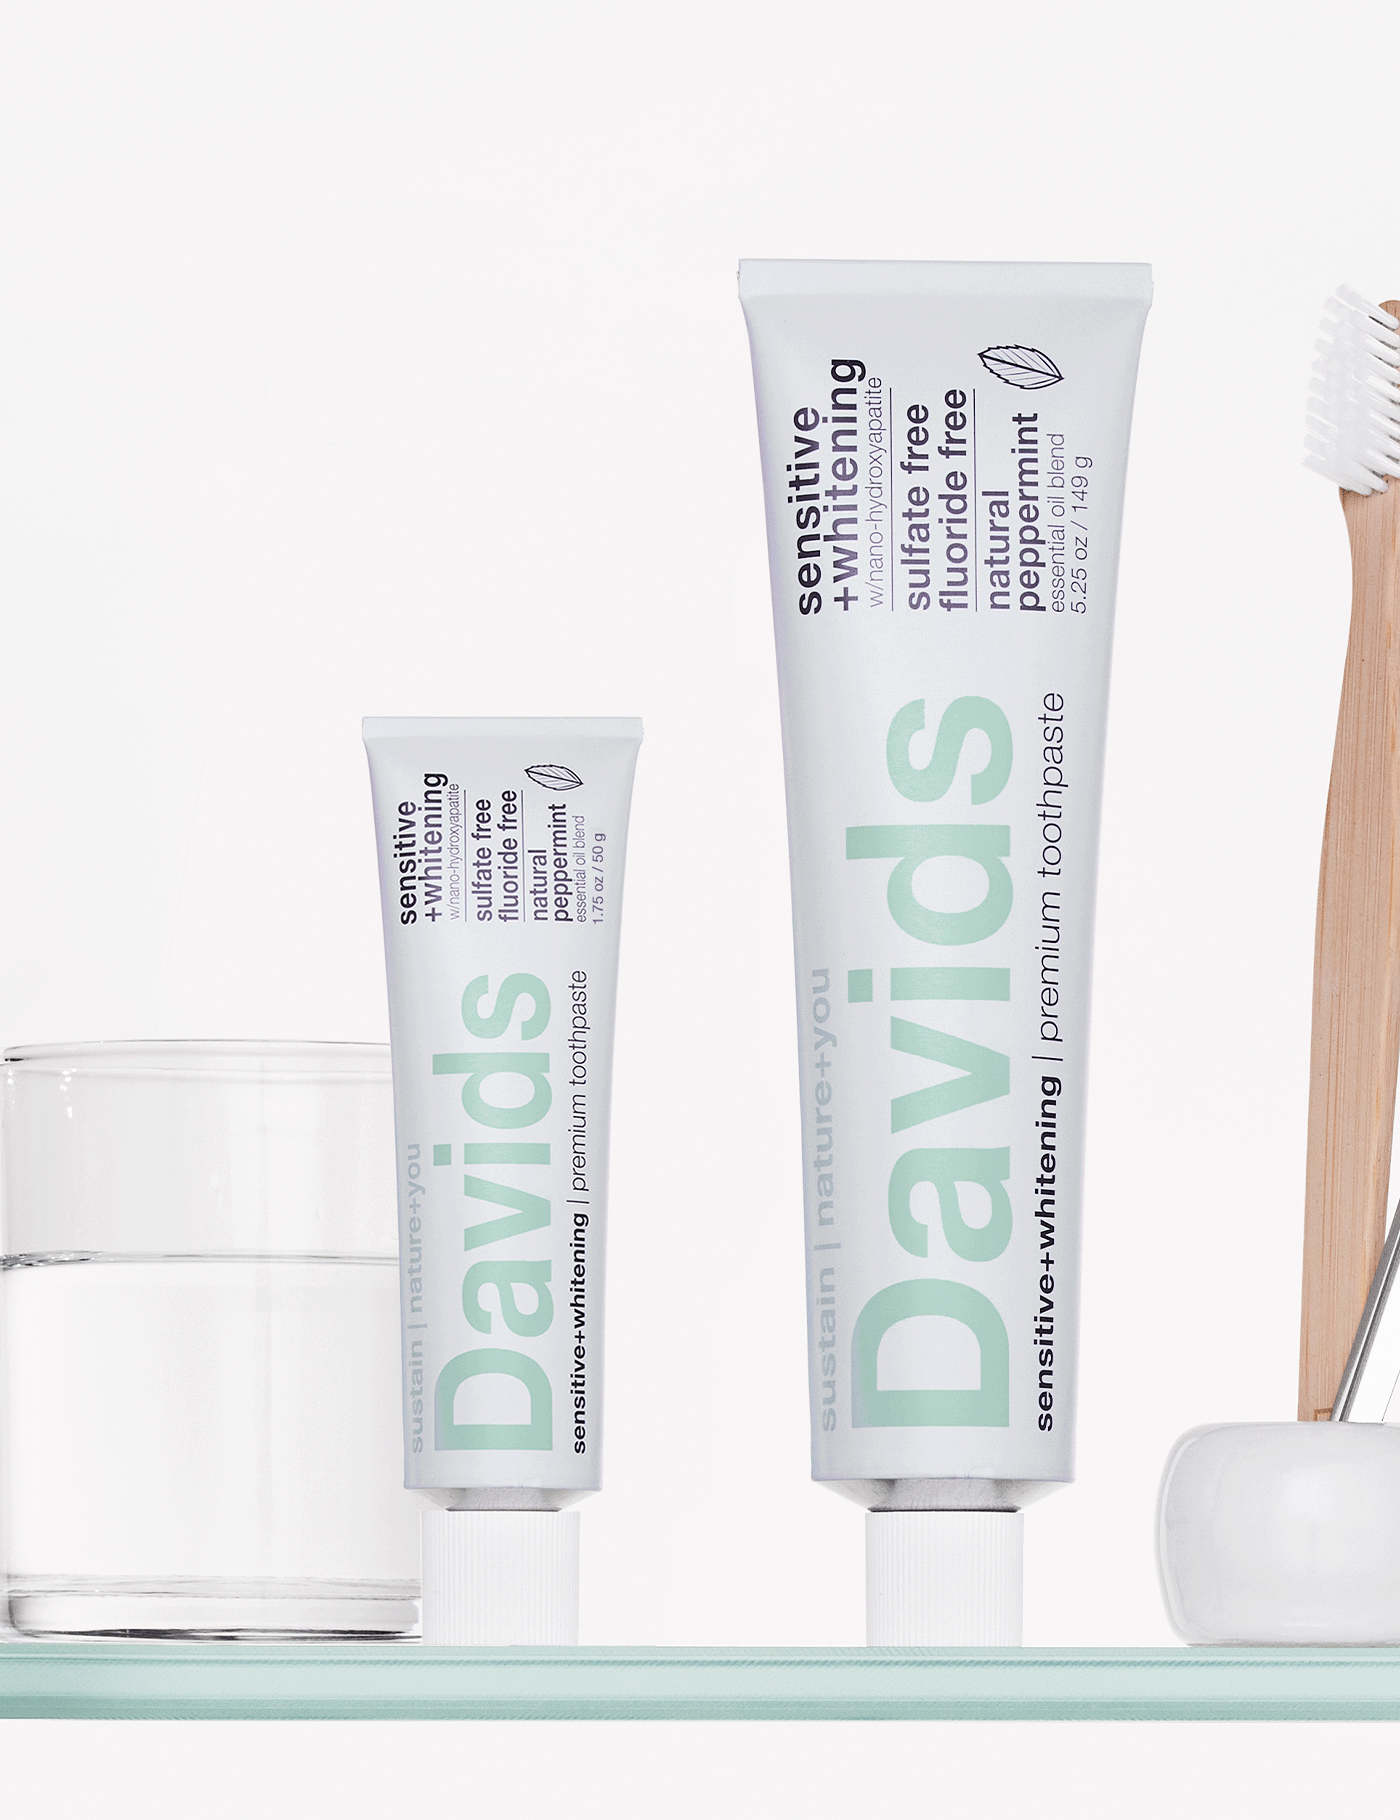 Davids travel size premium toothpaste / sensitive+whitening nano-hydroxyapatite  /  peppermint